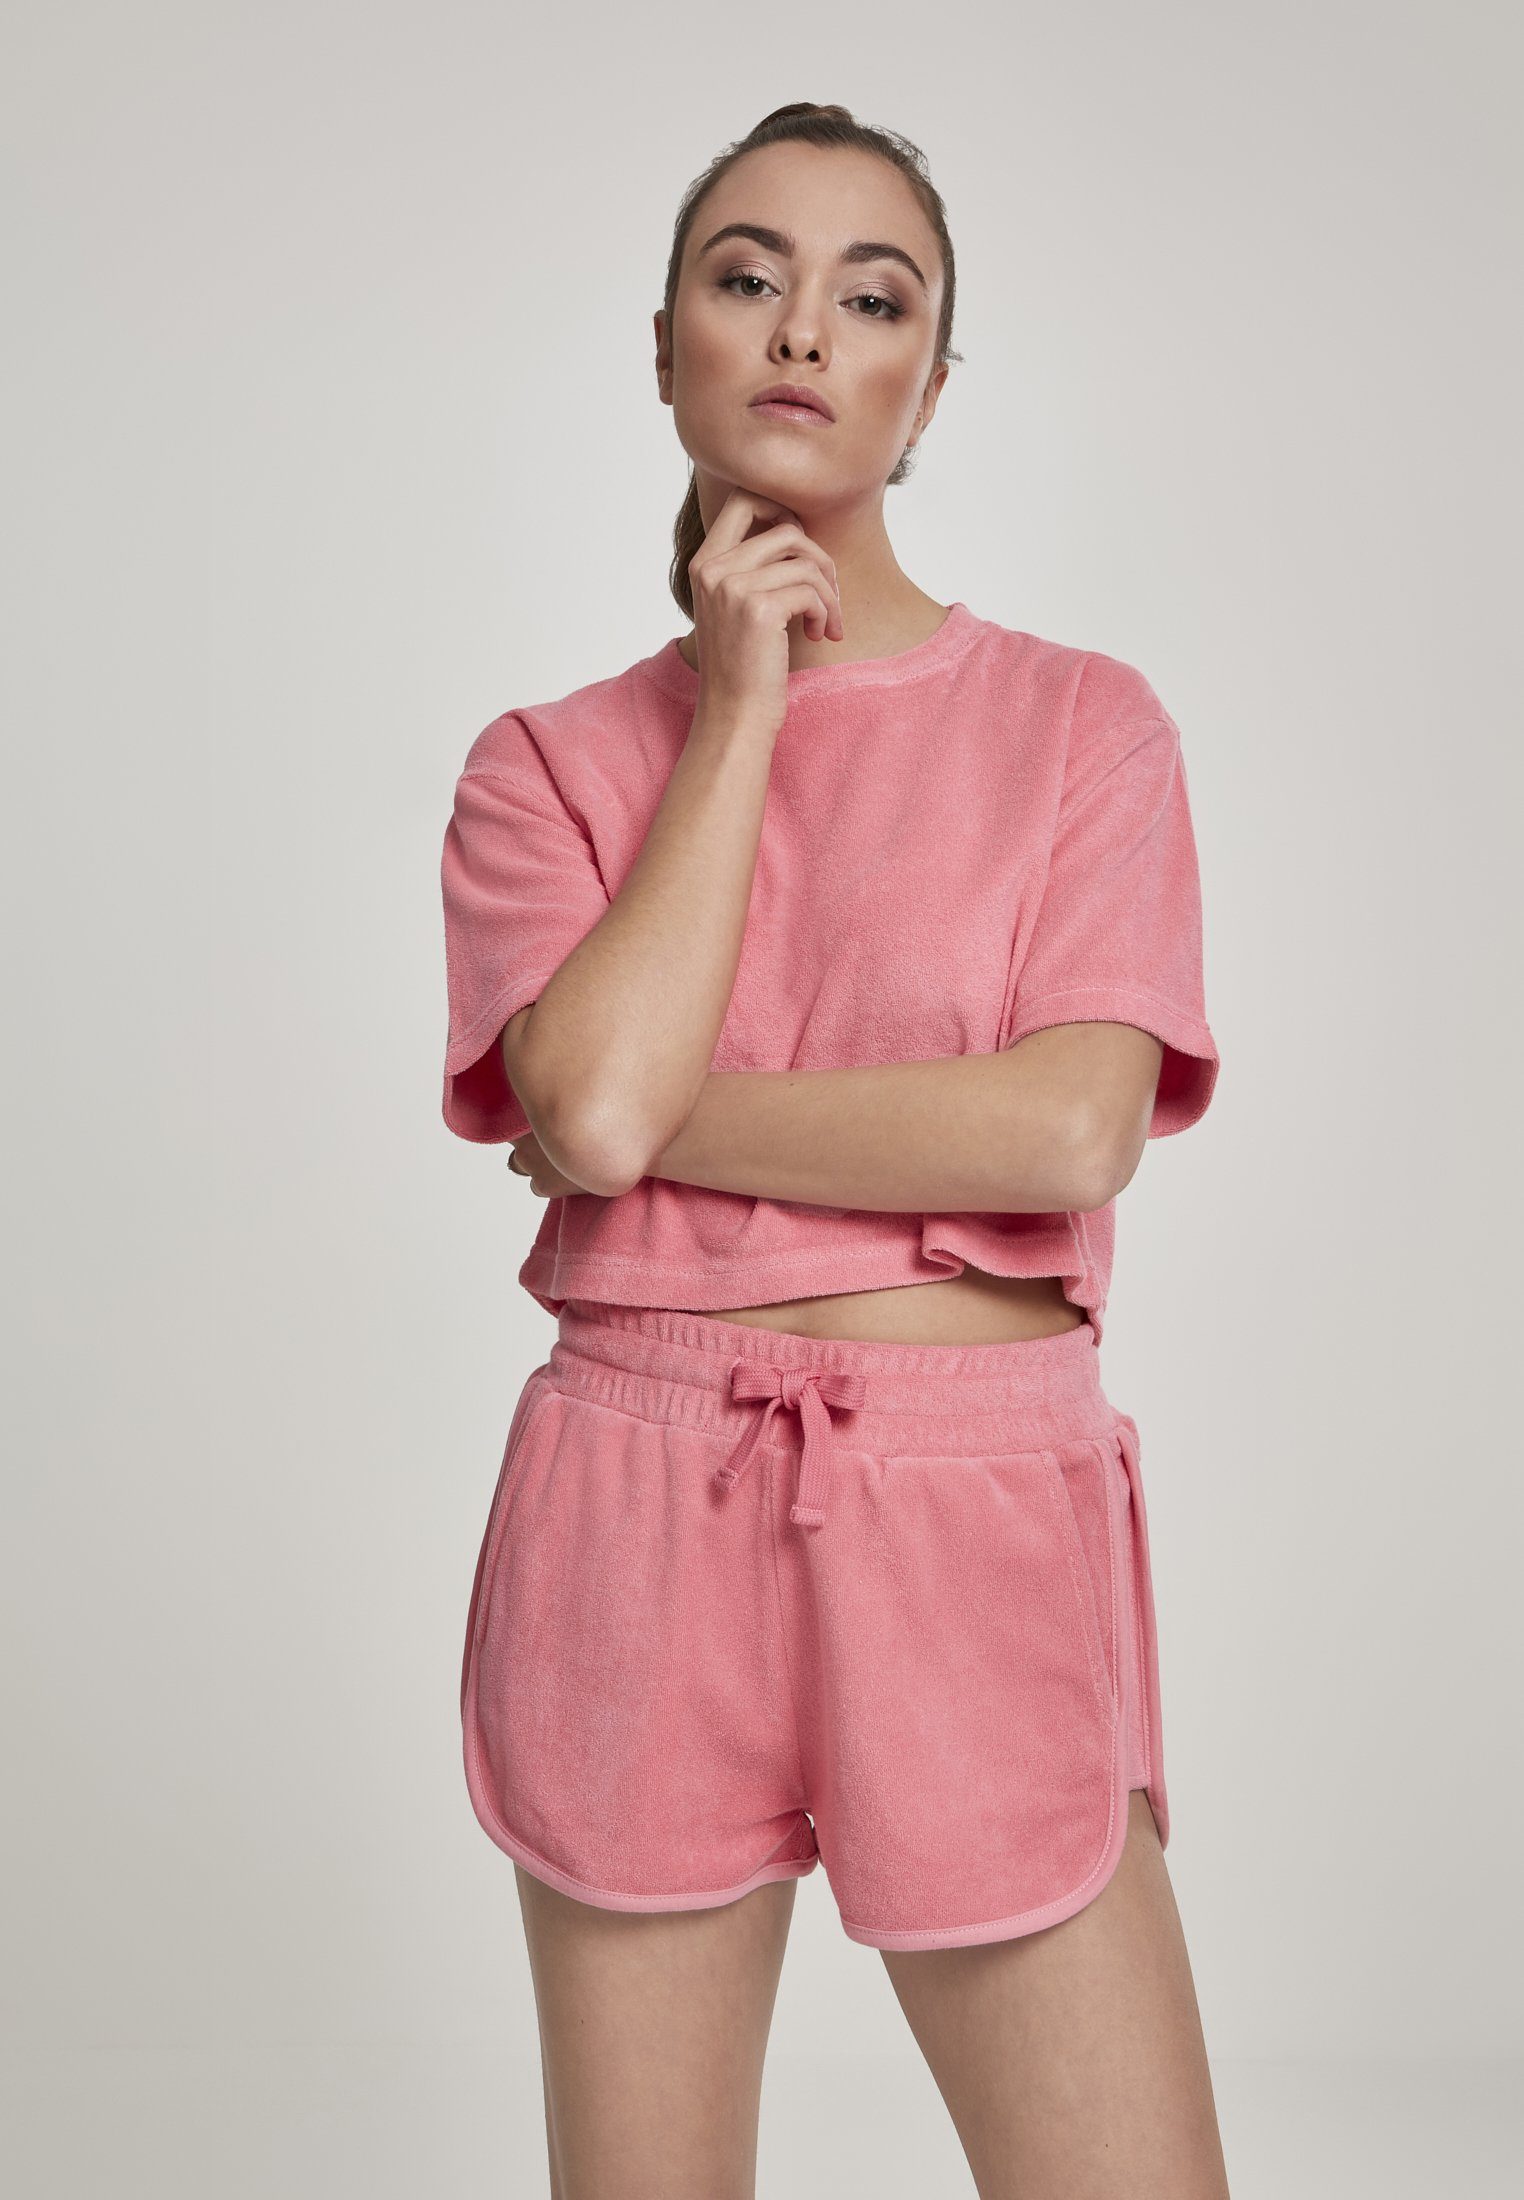 Towel Damen (1-tlg) CLASSICS URBAN Ladies pinkgrapefruit Short Kurzarmshirt Tee